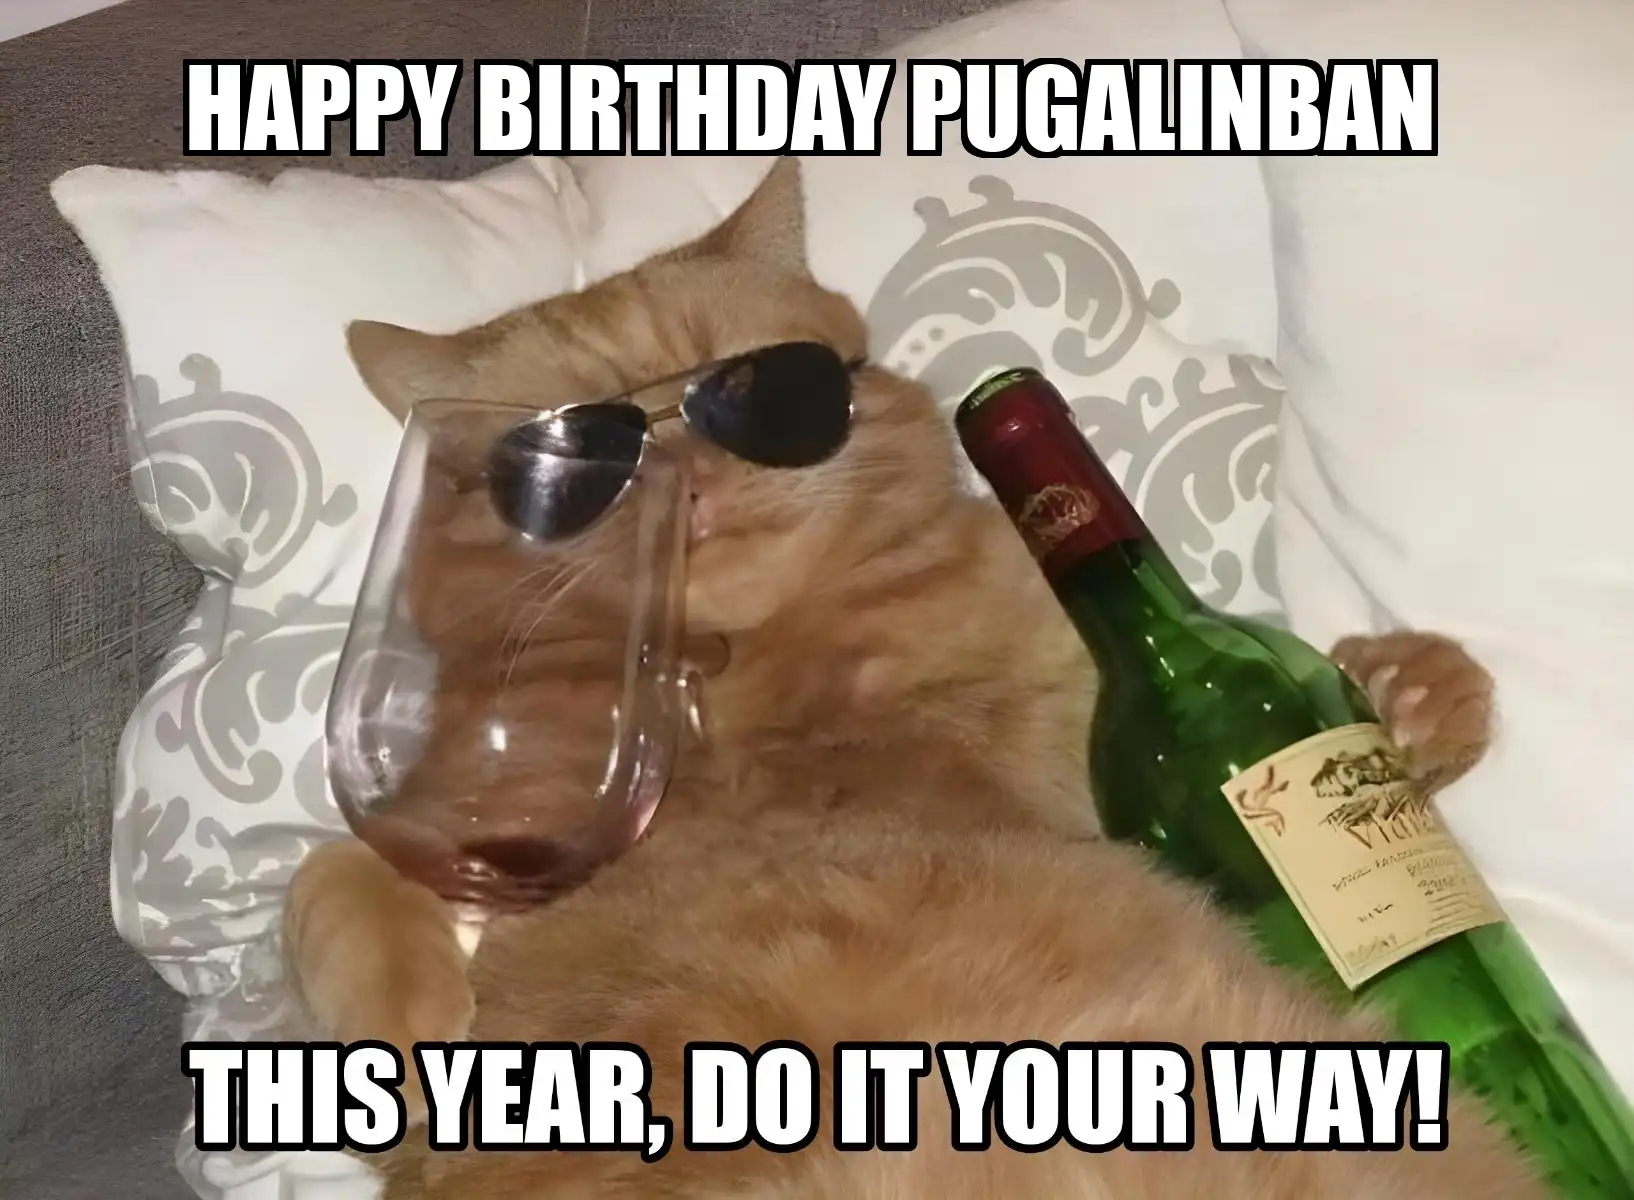 Happy Birthday Pugalinban This Year Do It Your Way Meme